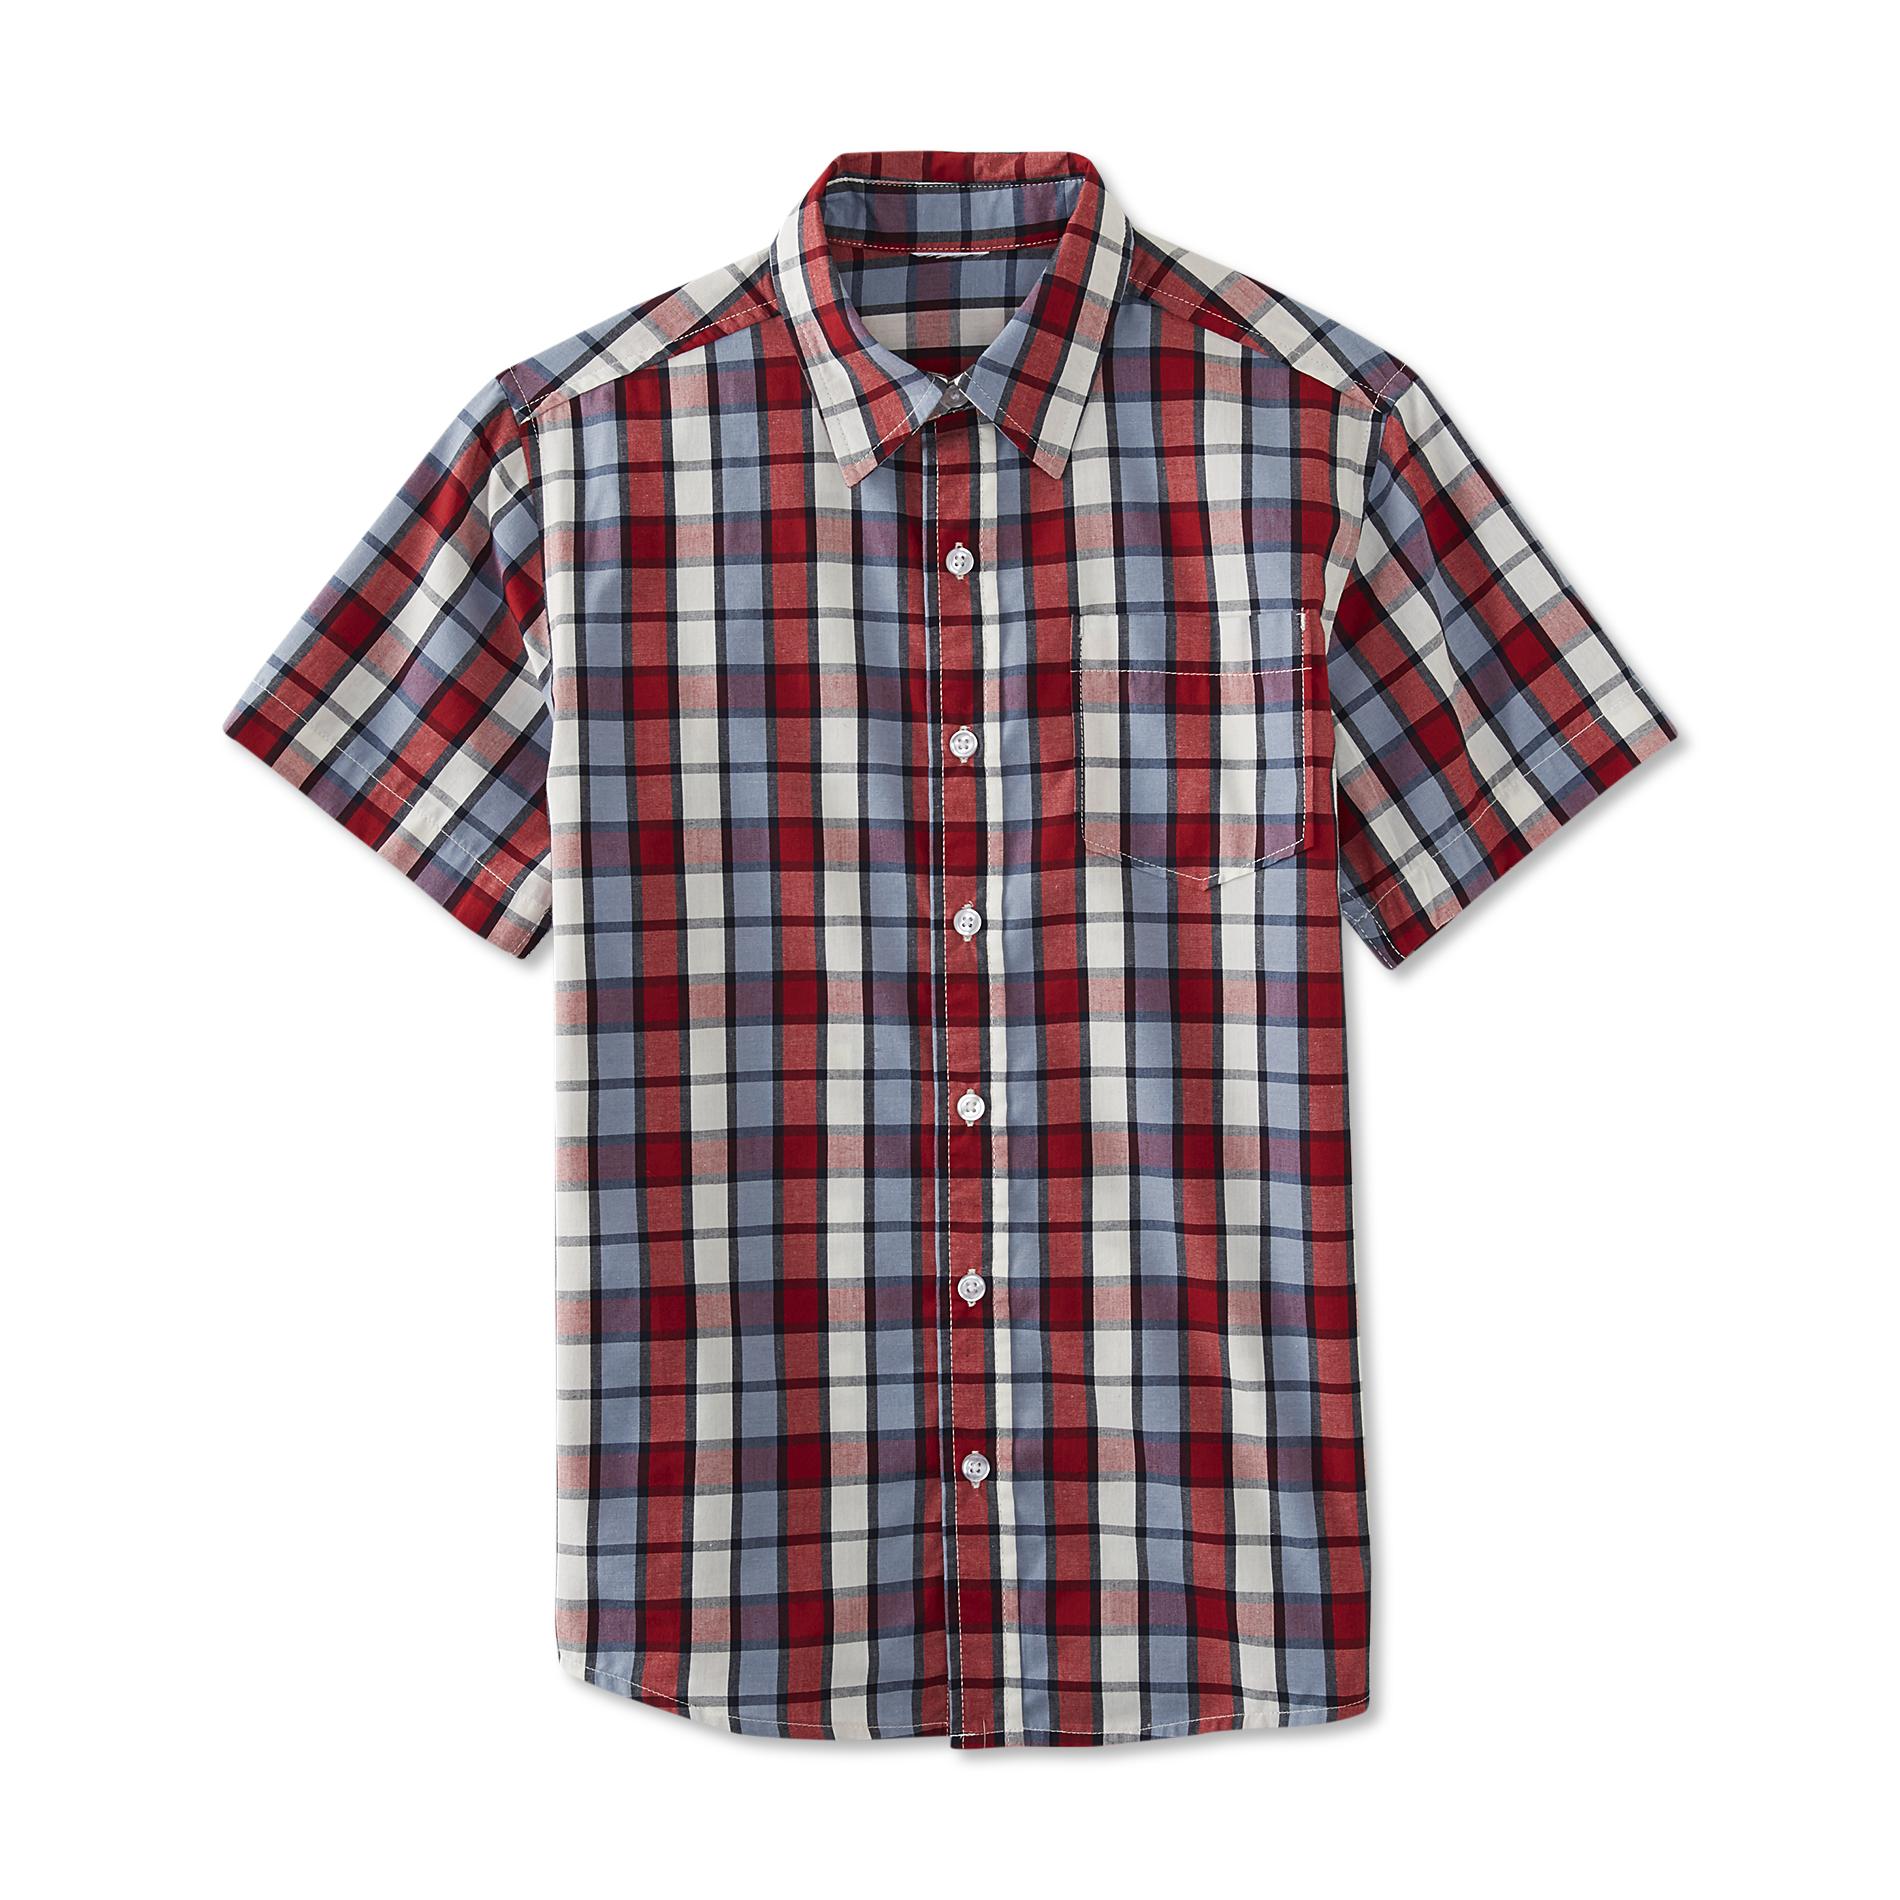 Simply Styled Boy's Short-Sleeve Shirt - Check